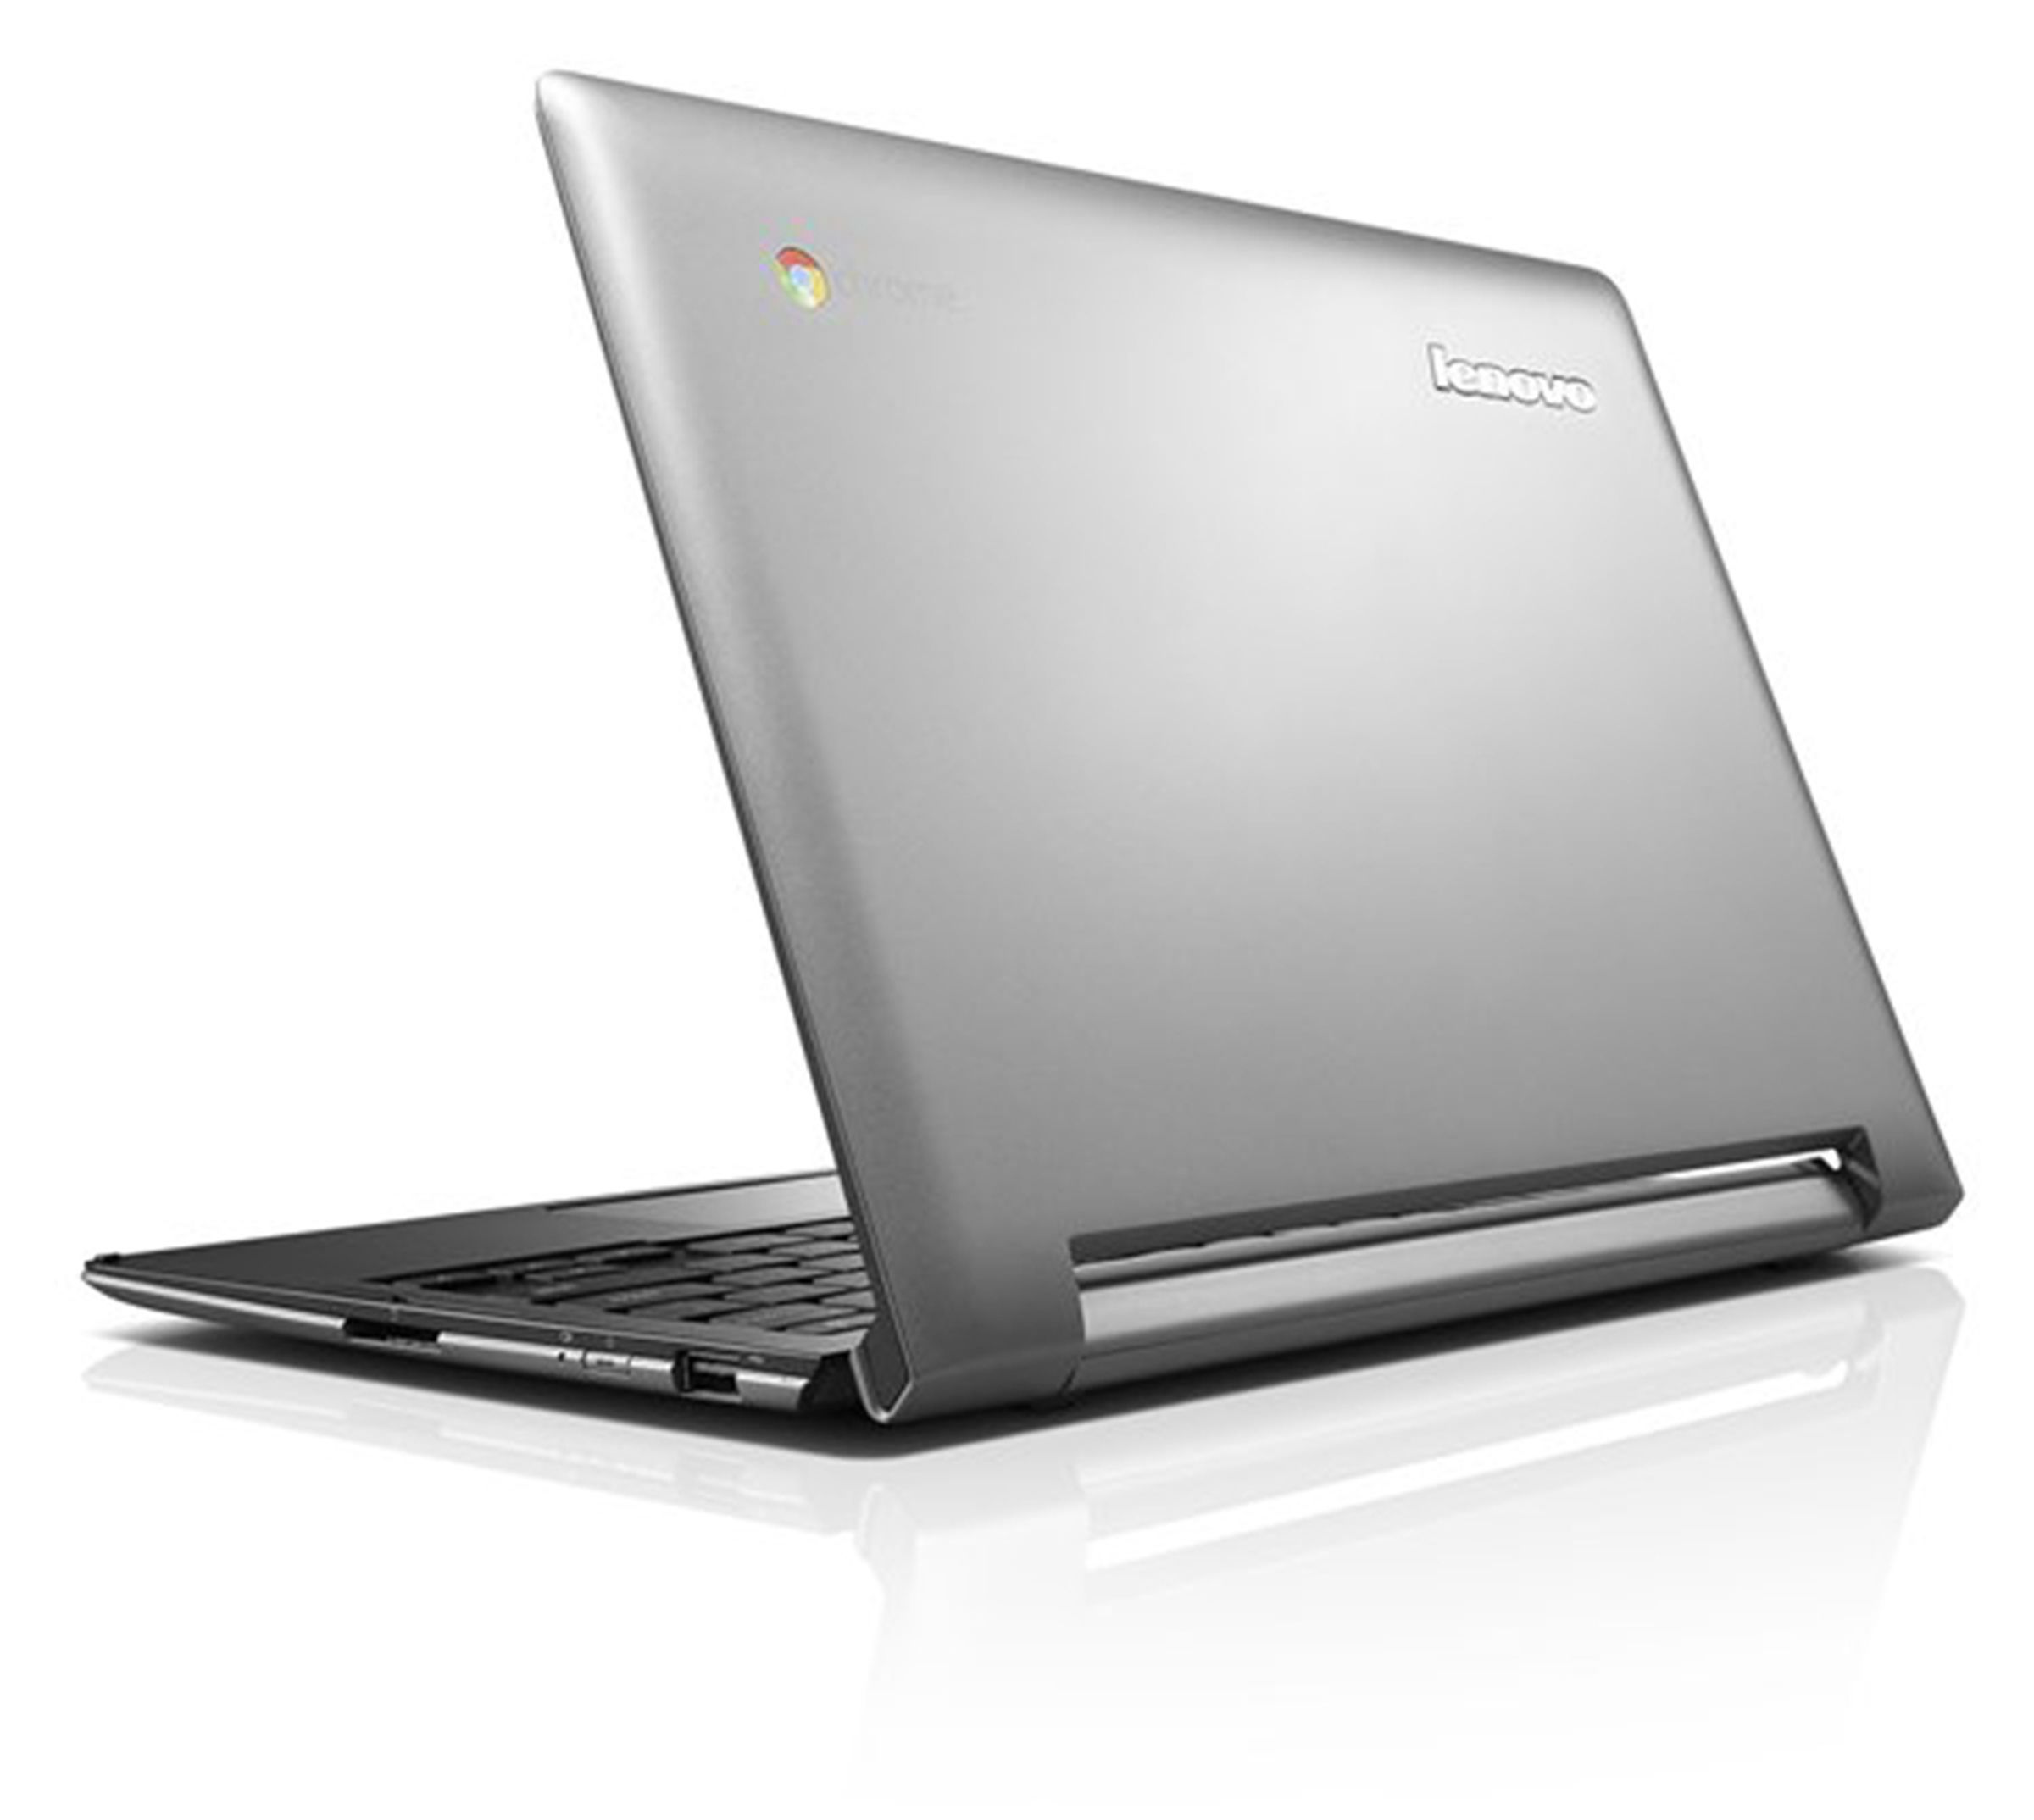 Lenovo N20p Chromebook pictures